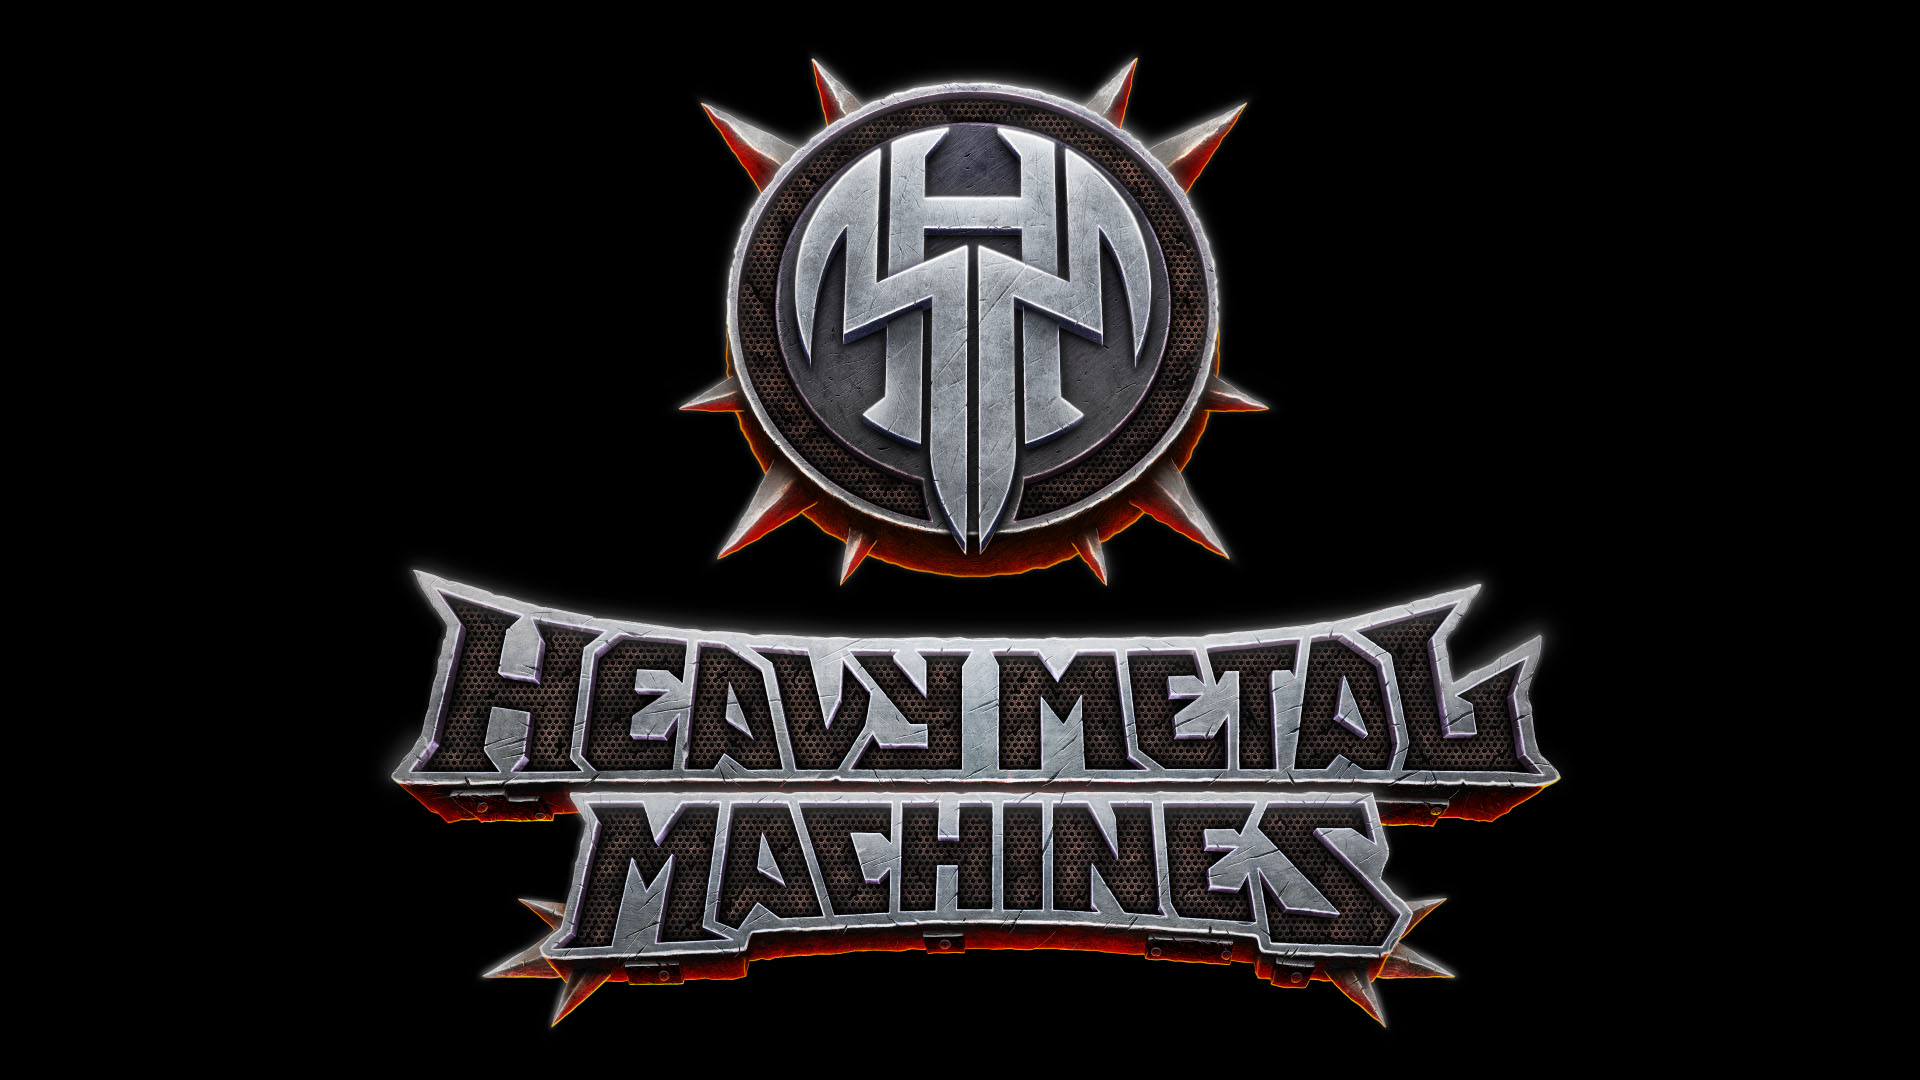 heavy metal machines playstation